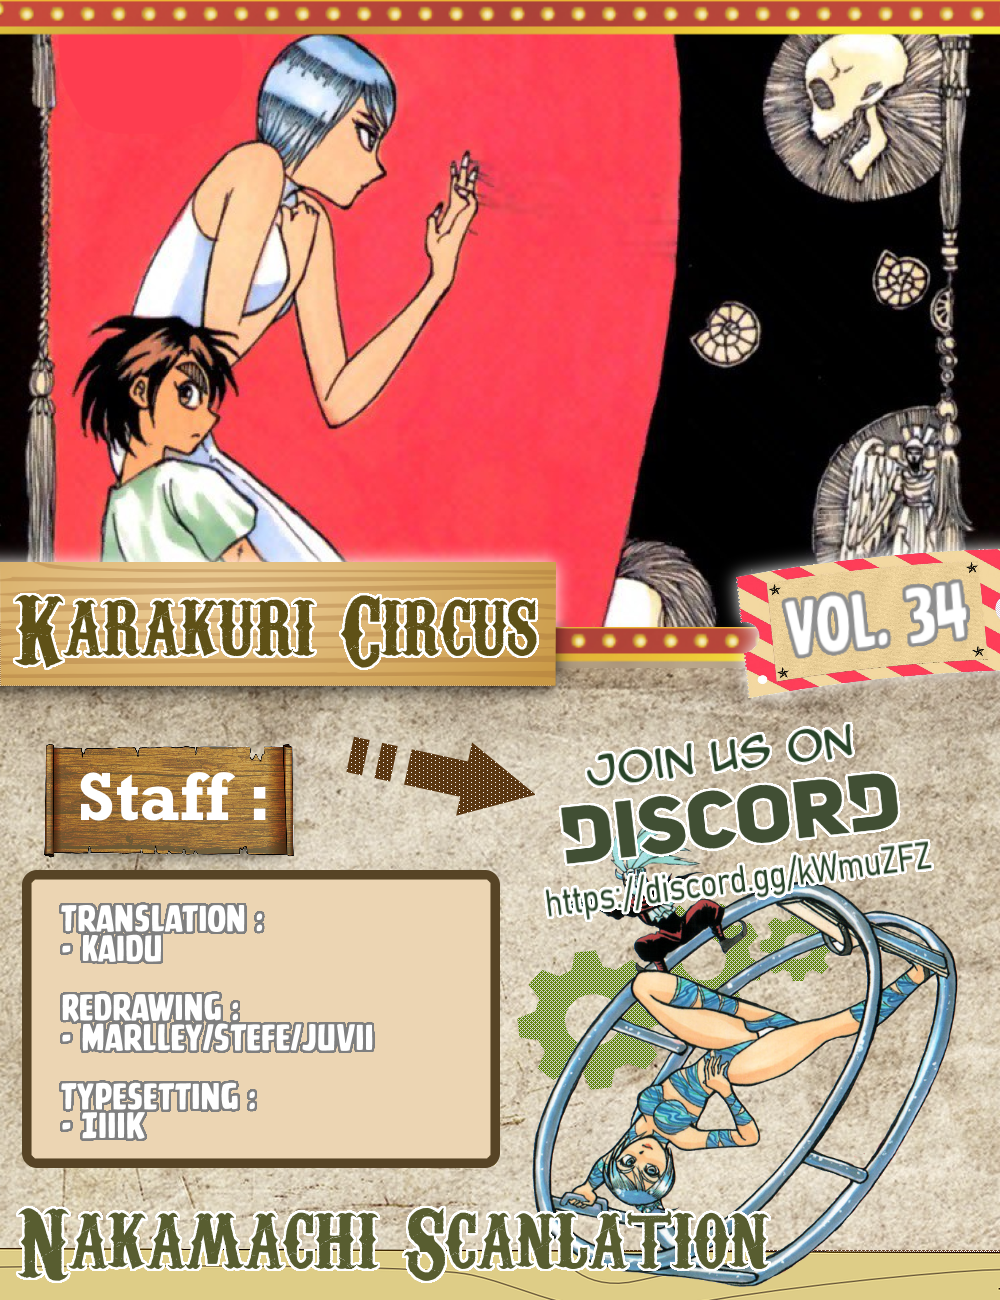 Karakuri Circus Chapter 330: Main Part - Summer At Kuroga Village - Act 12: Temporary Closing - Picture 1